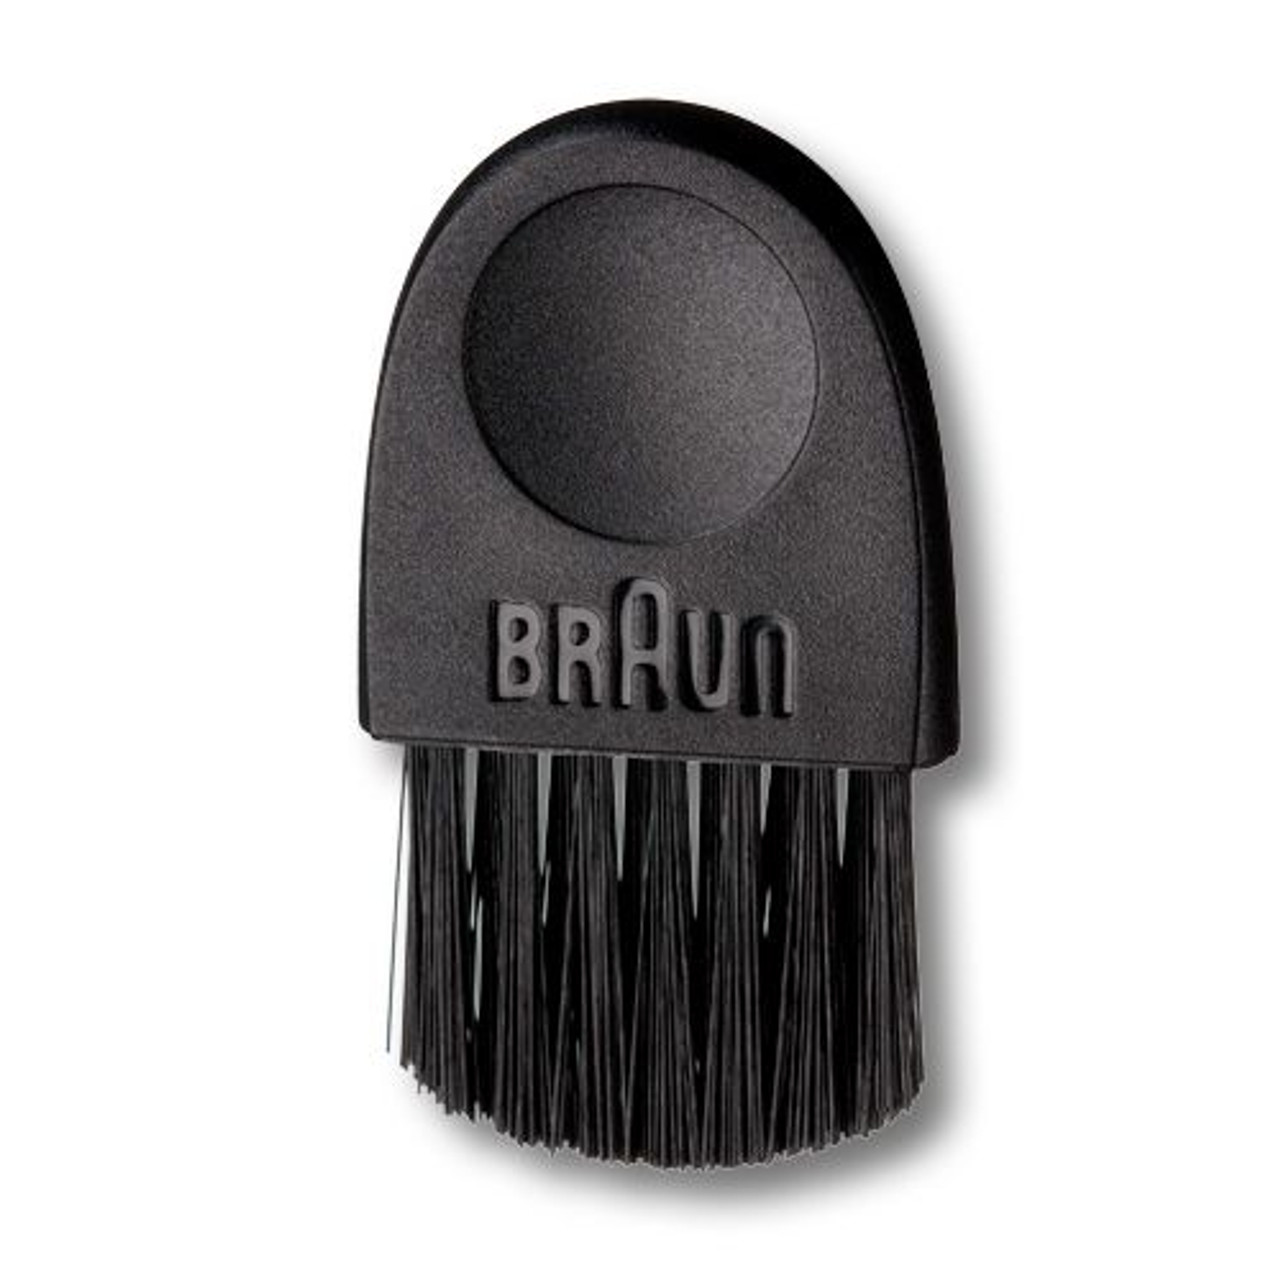 Braun Shaver Cleaning Brush